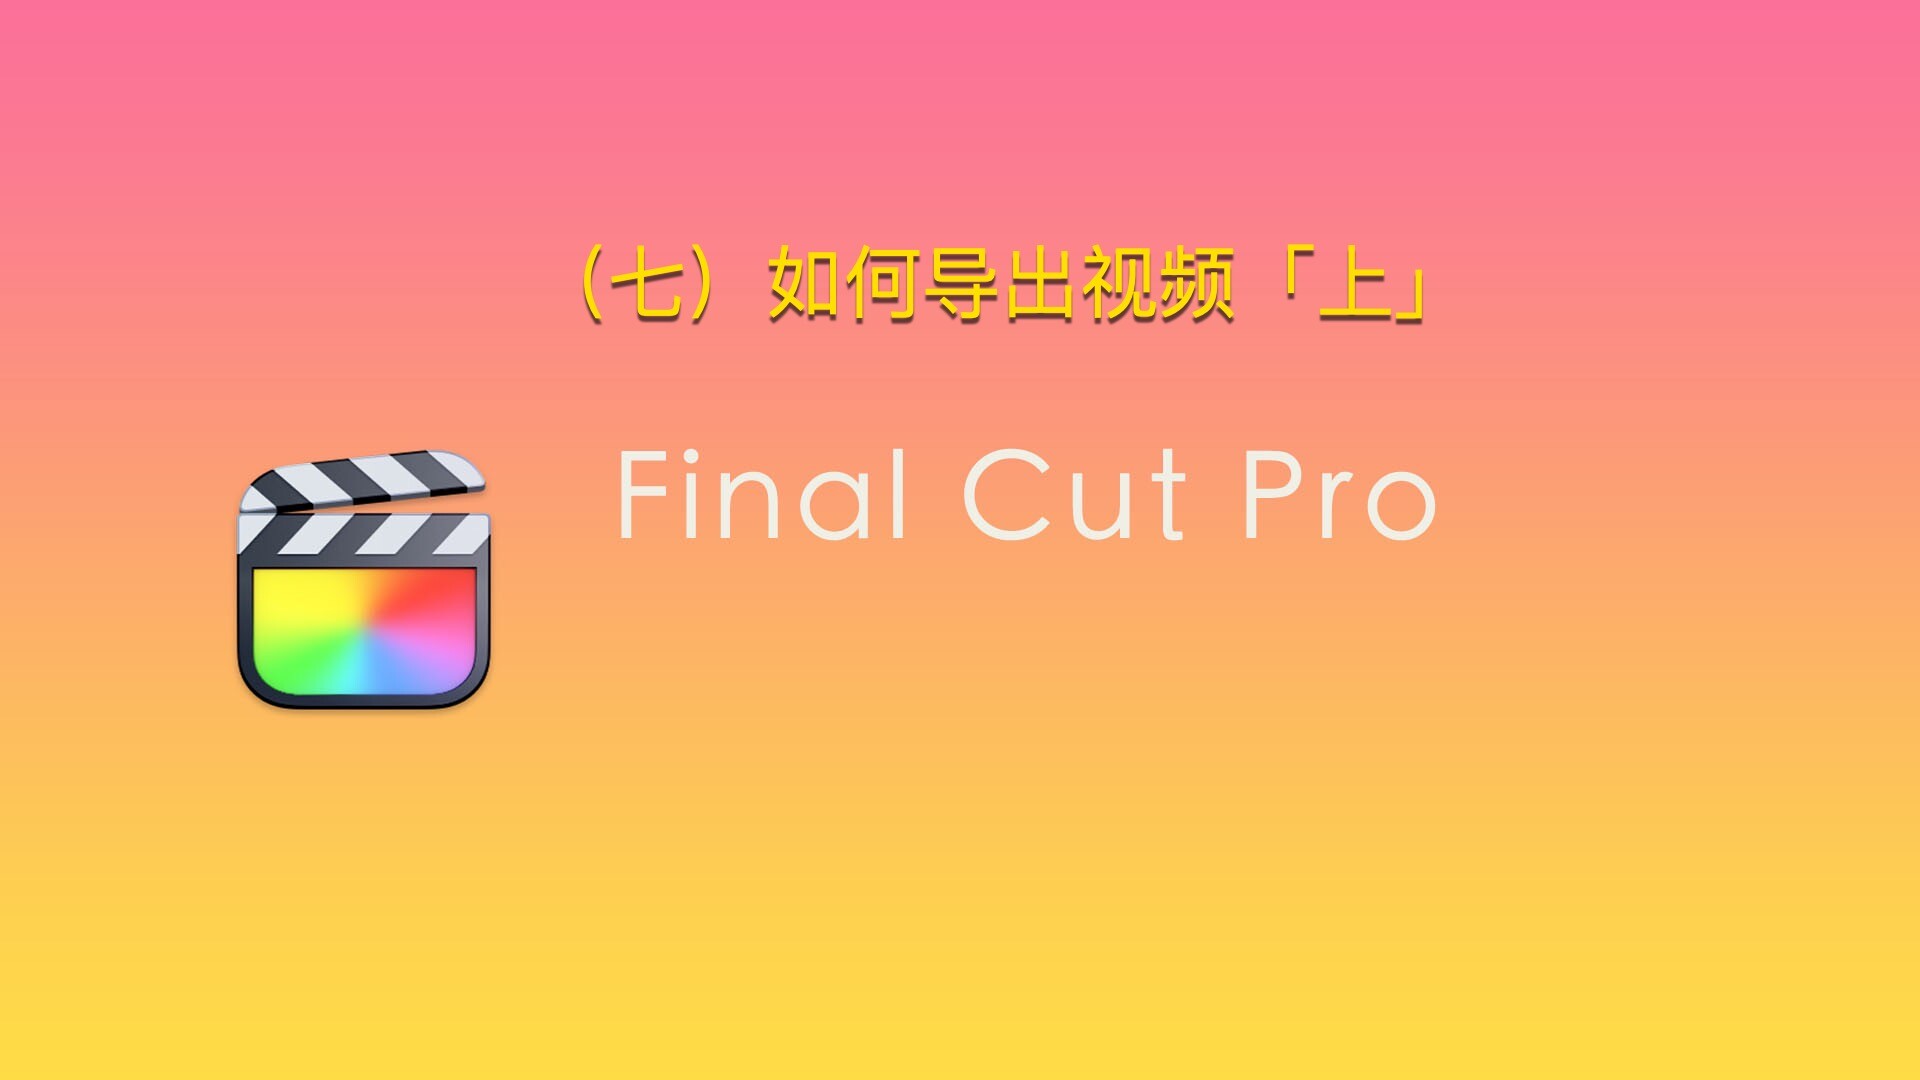 Final Cut Pro中文新手教程 (7) 如何导出视频「上」